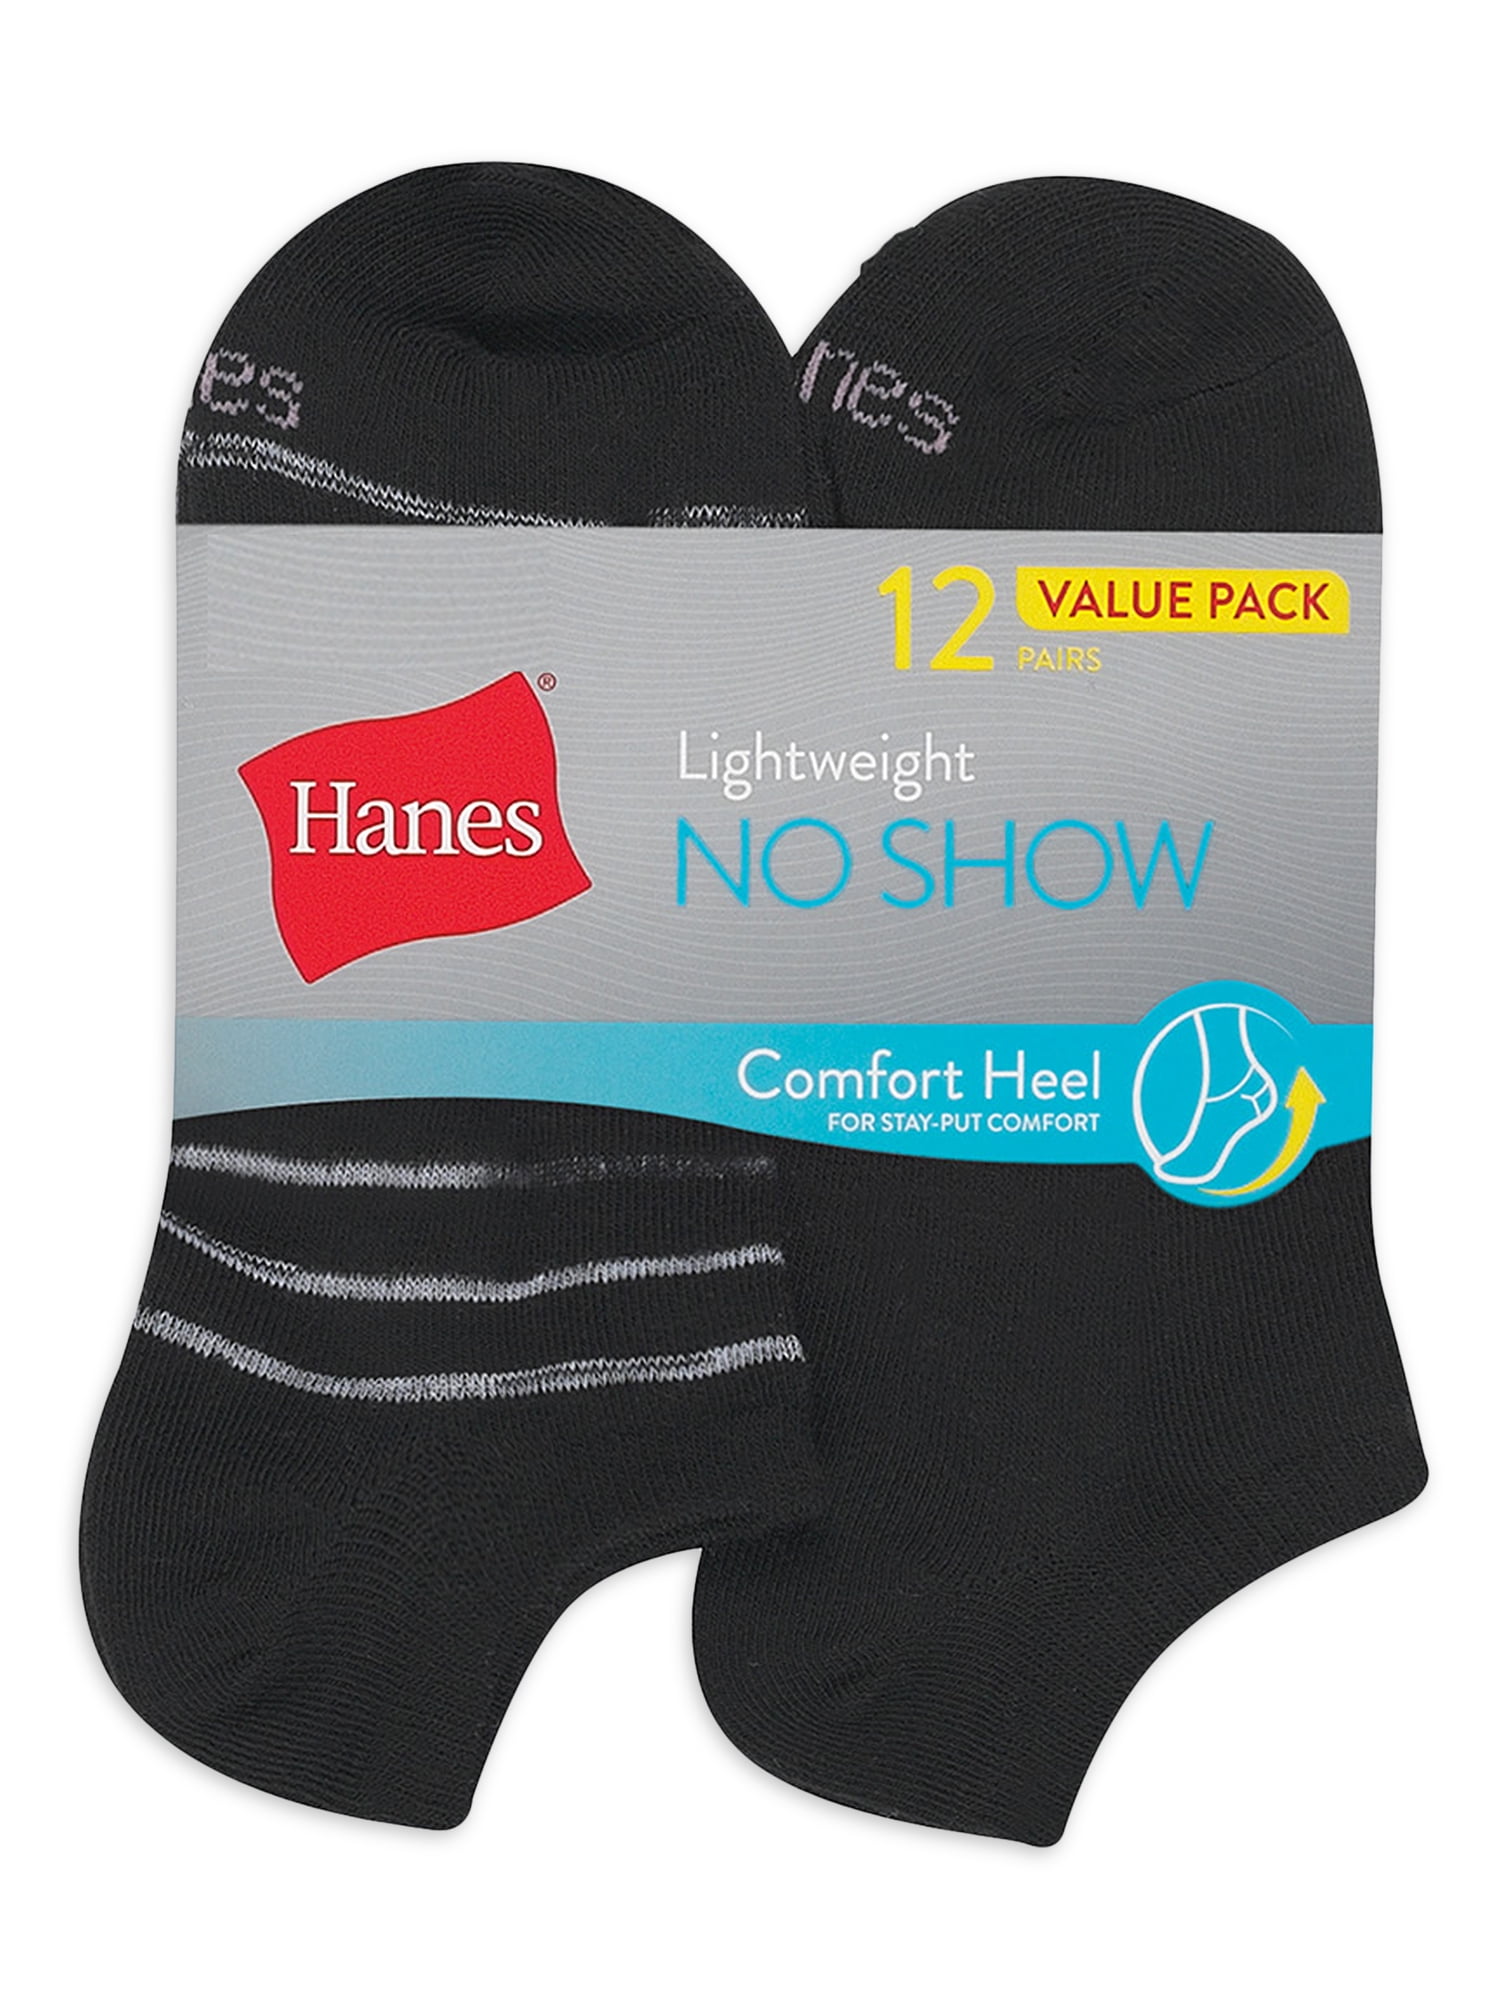 Hanes Women's Lightweight No Show Socks, 12-Pack, Sizes 8-12